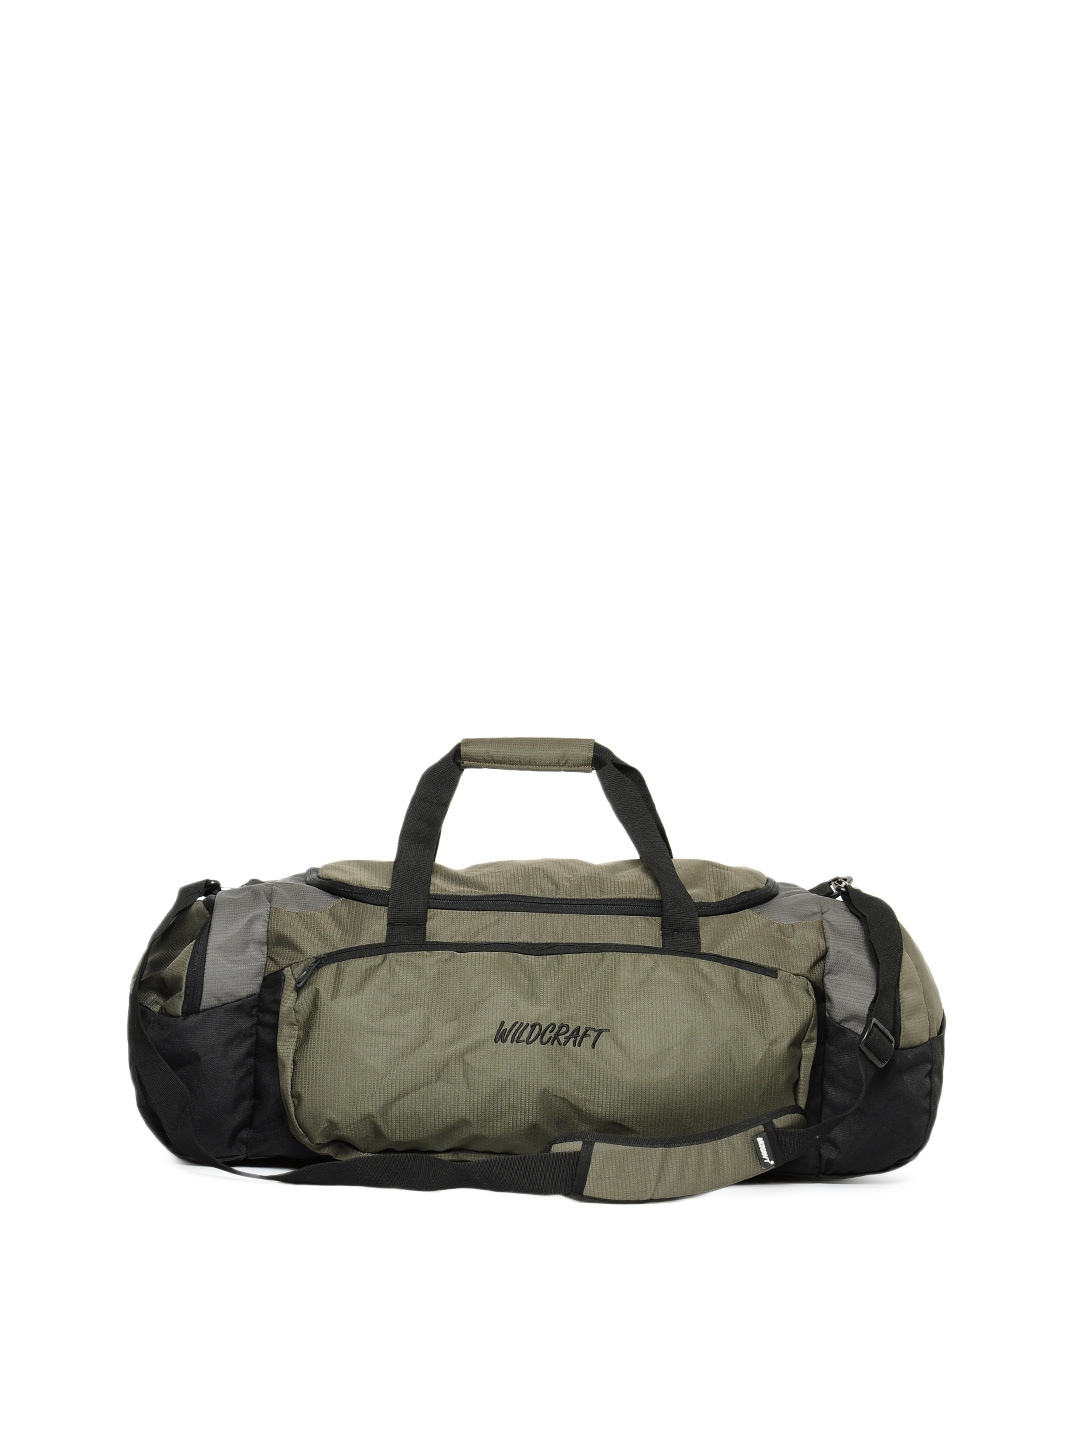 Wildcraft Unisex Olive Green Duffle Bag